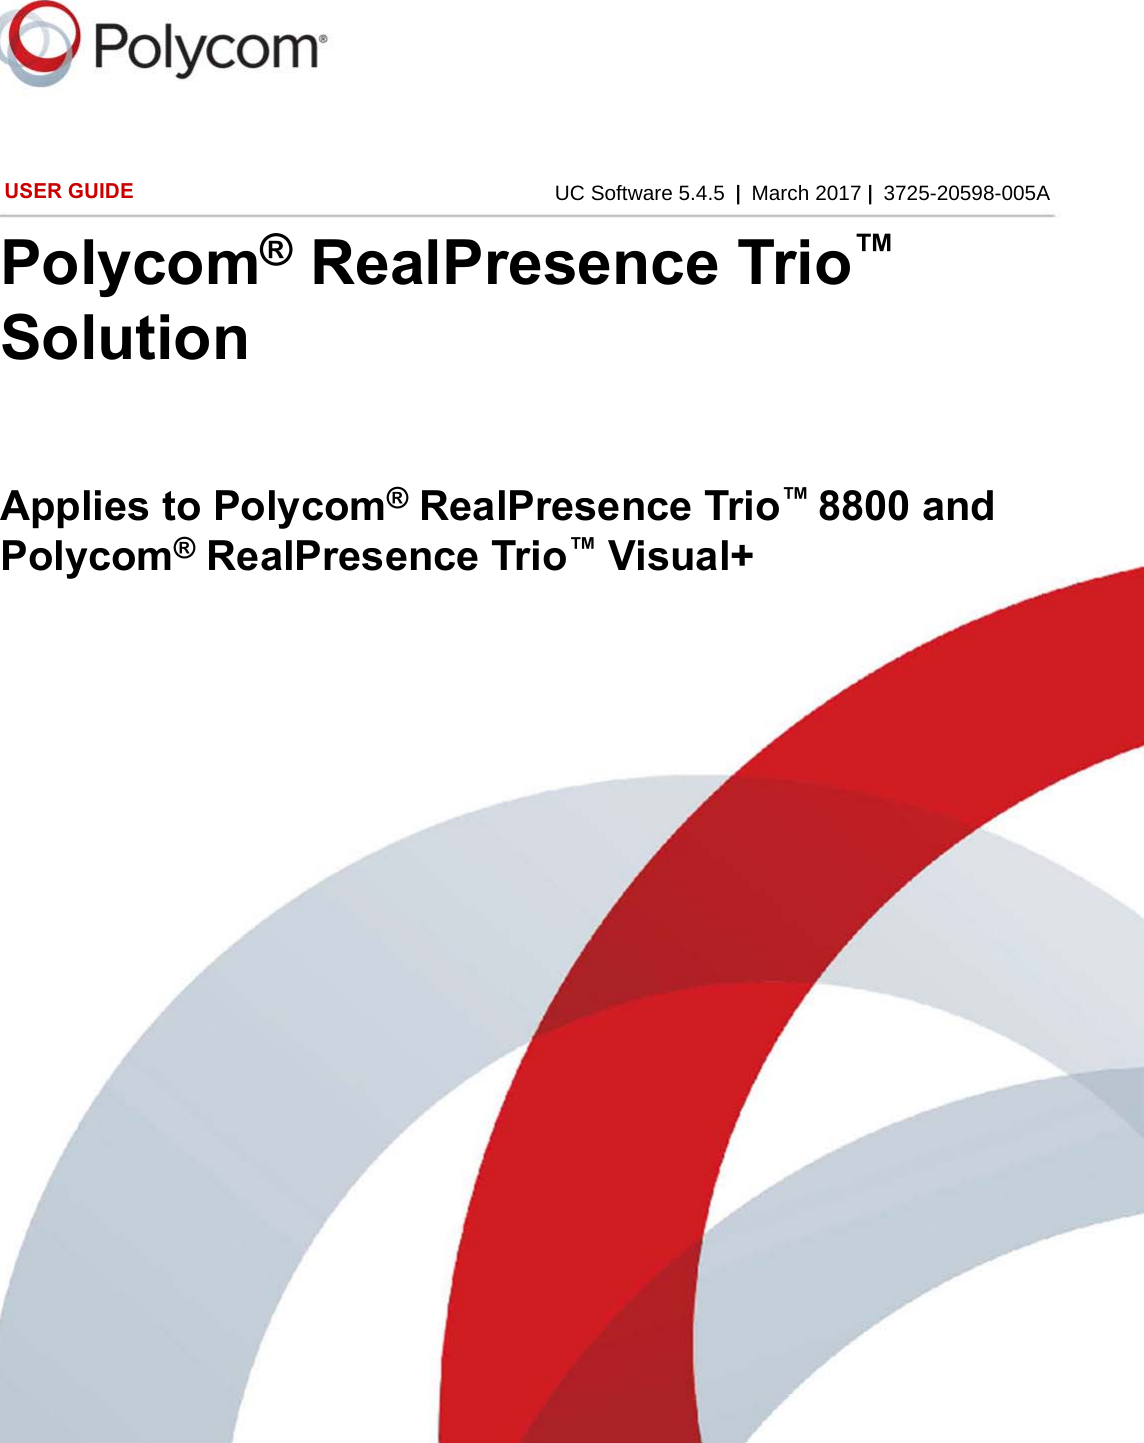 UC Software 5.4.5 |March 2017 |3725-20598-005AUSER GUIDEPolycom® RealPresence Trio™ SolutionApplies to Polycom® RealPresence Trio™ 8800 and Polycom® RealPresence Trio™ Visual+